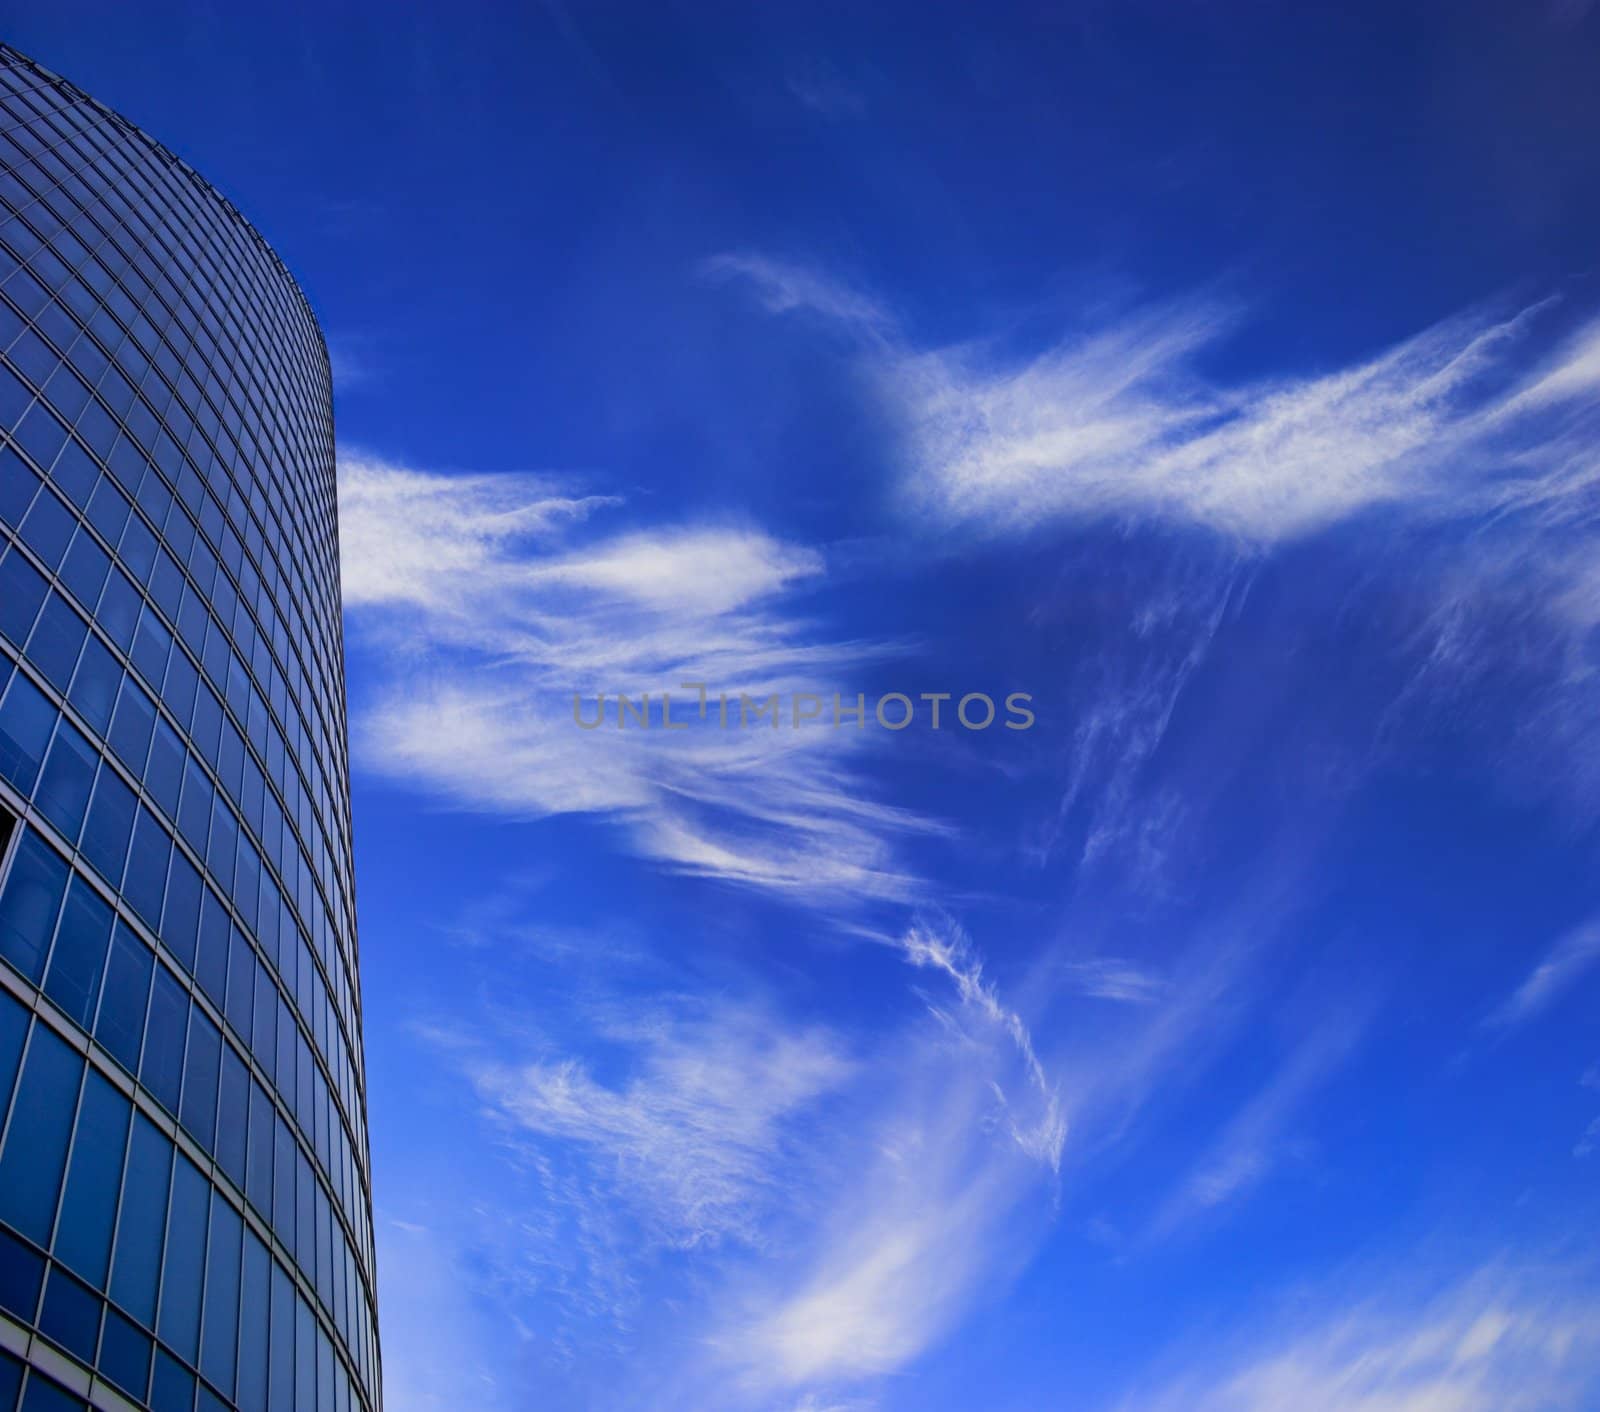 Skyscraper facade on blue sky by ints